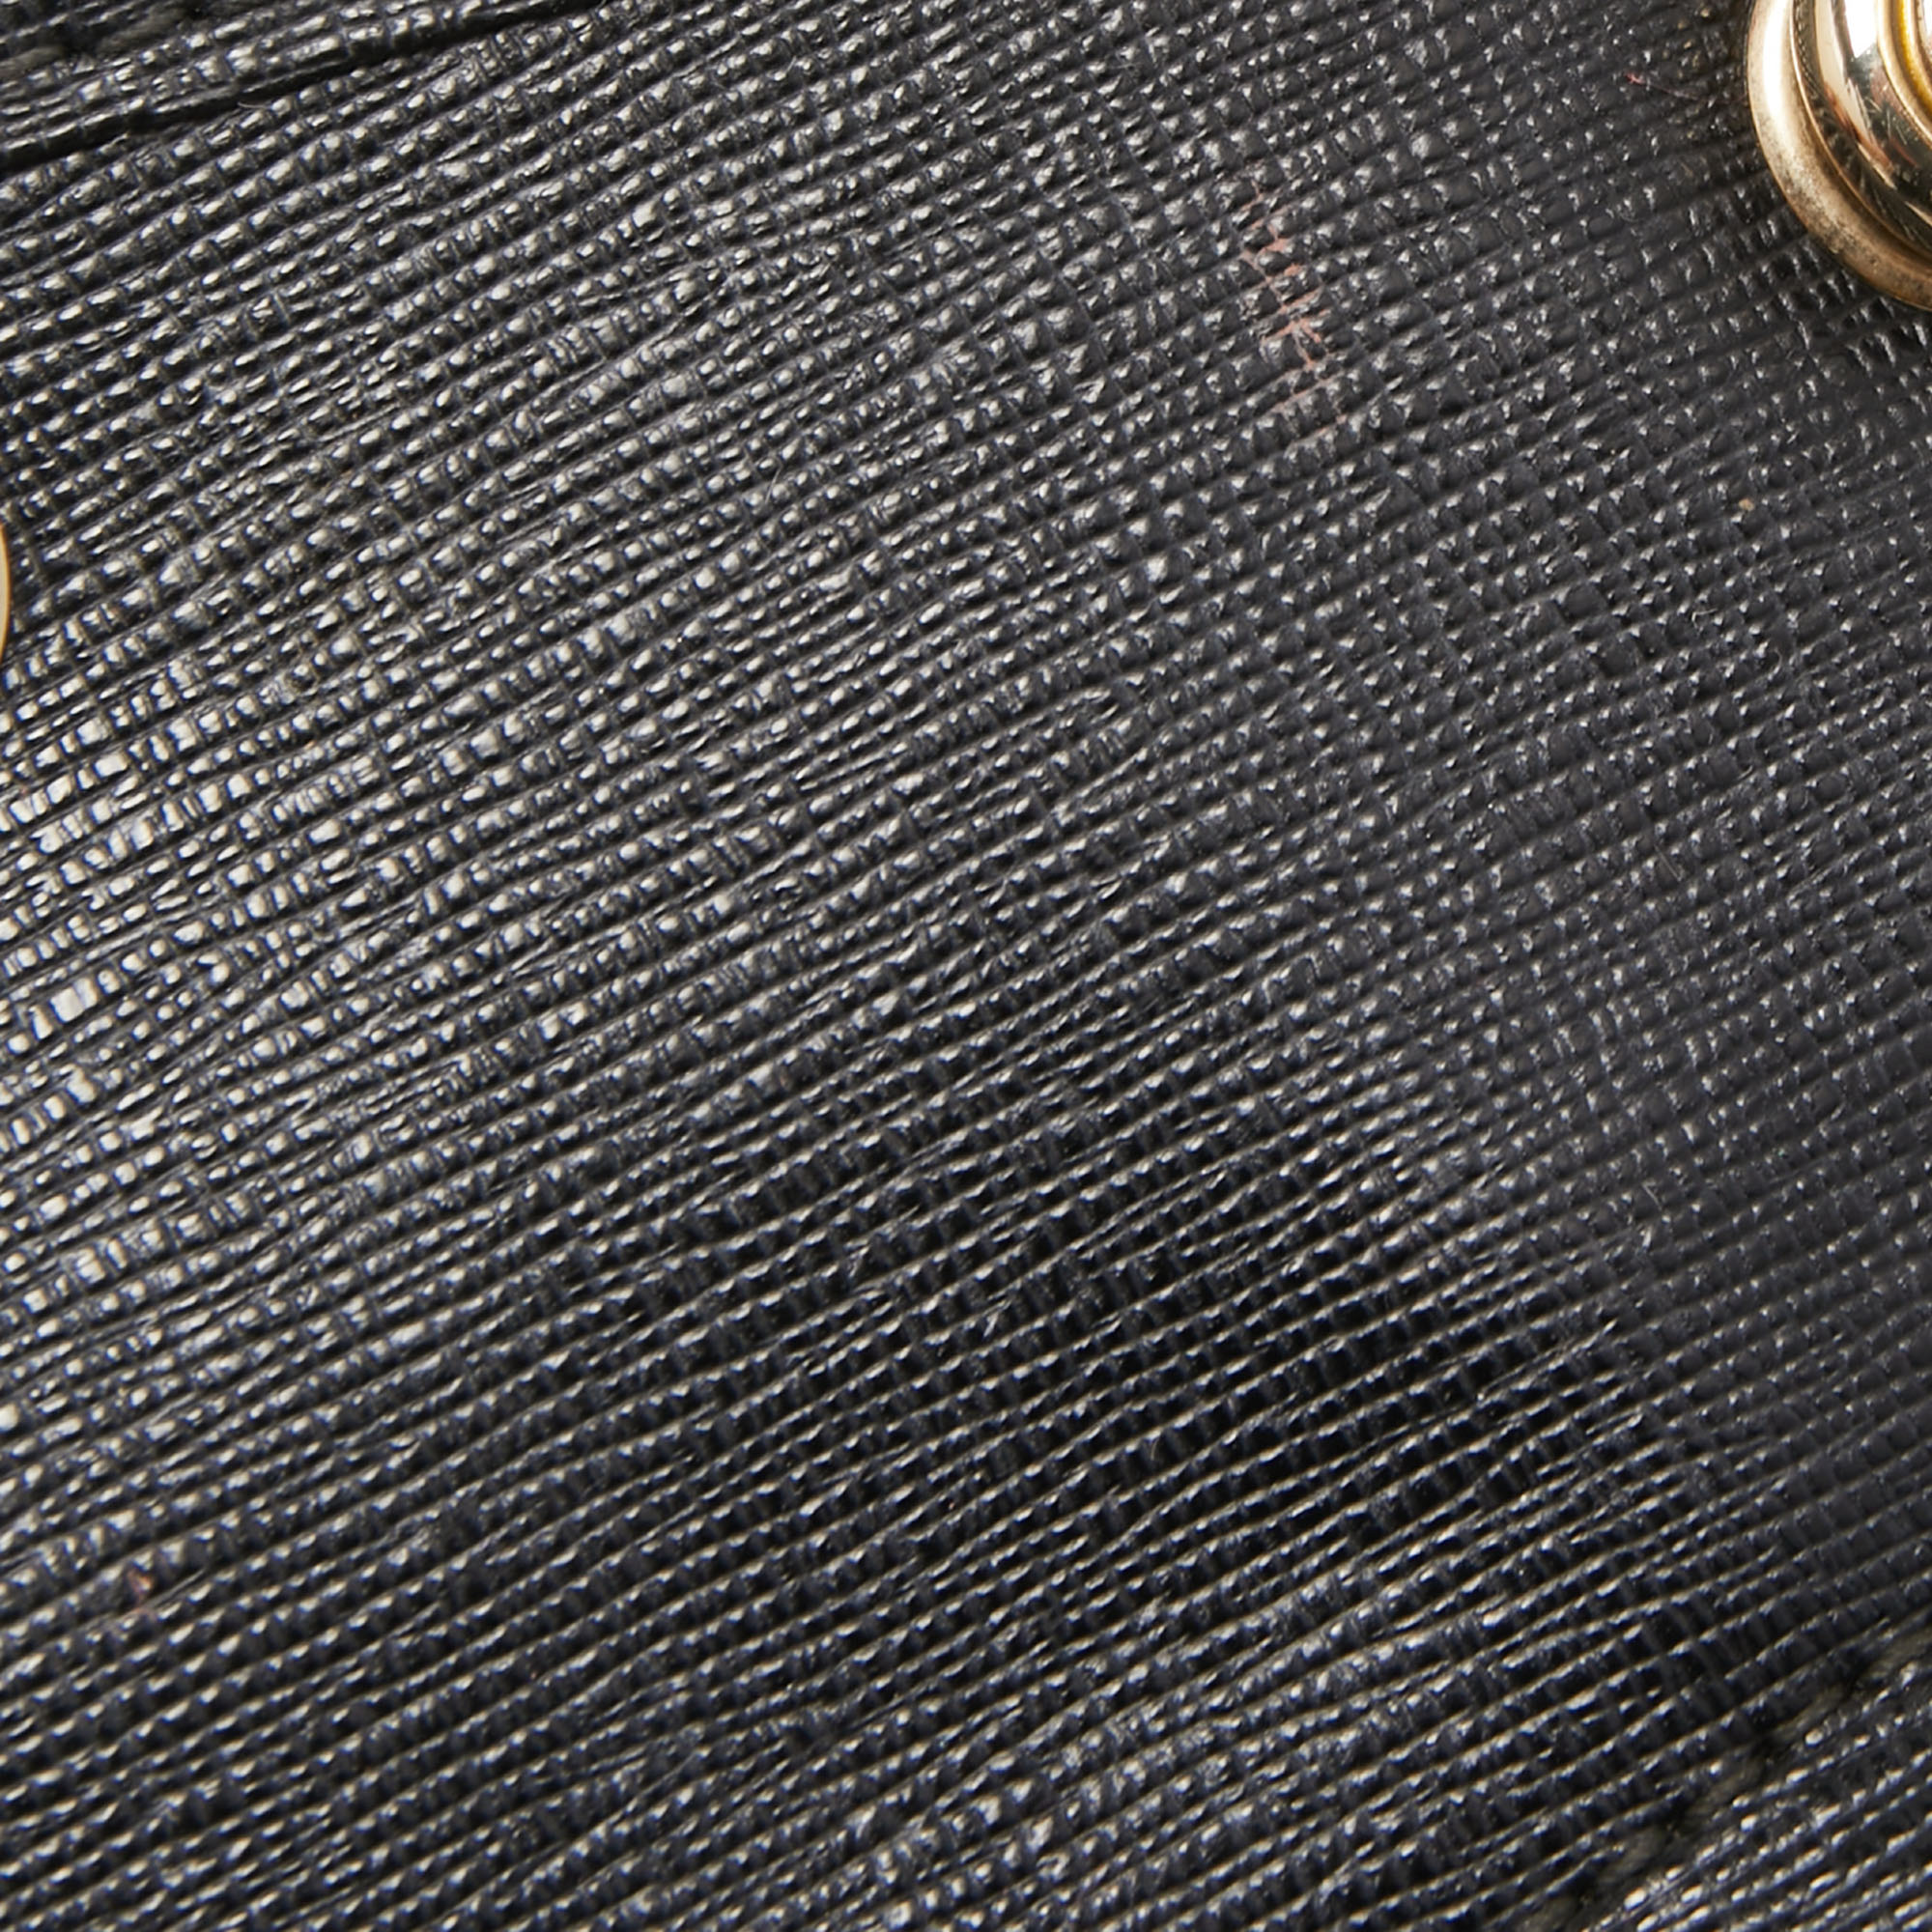 Furla Black Leather Piper Satchel